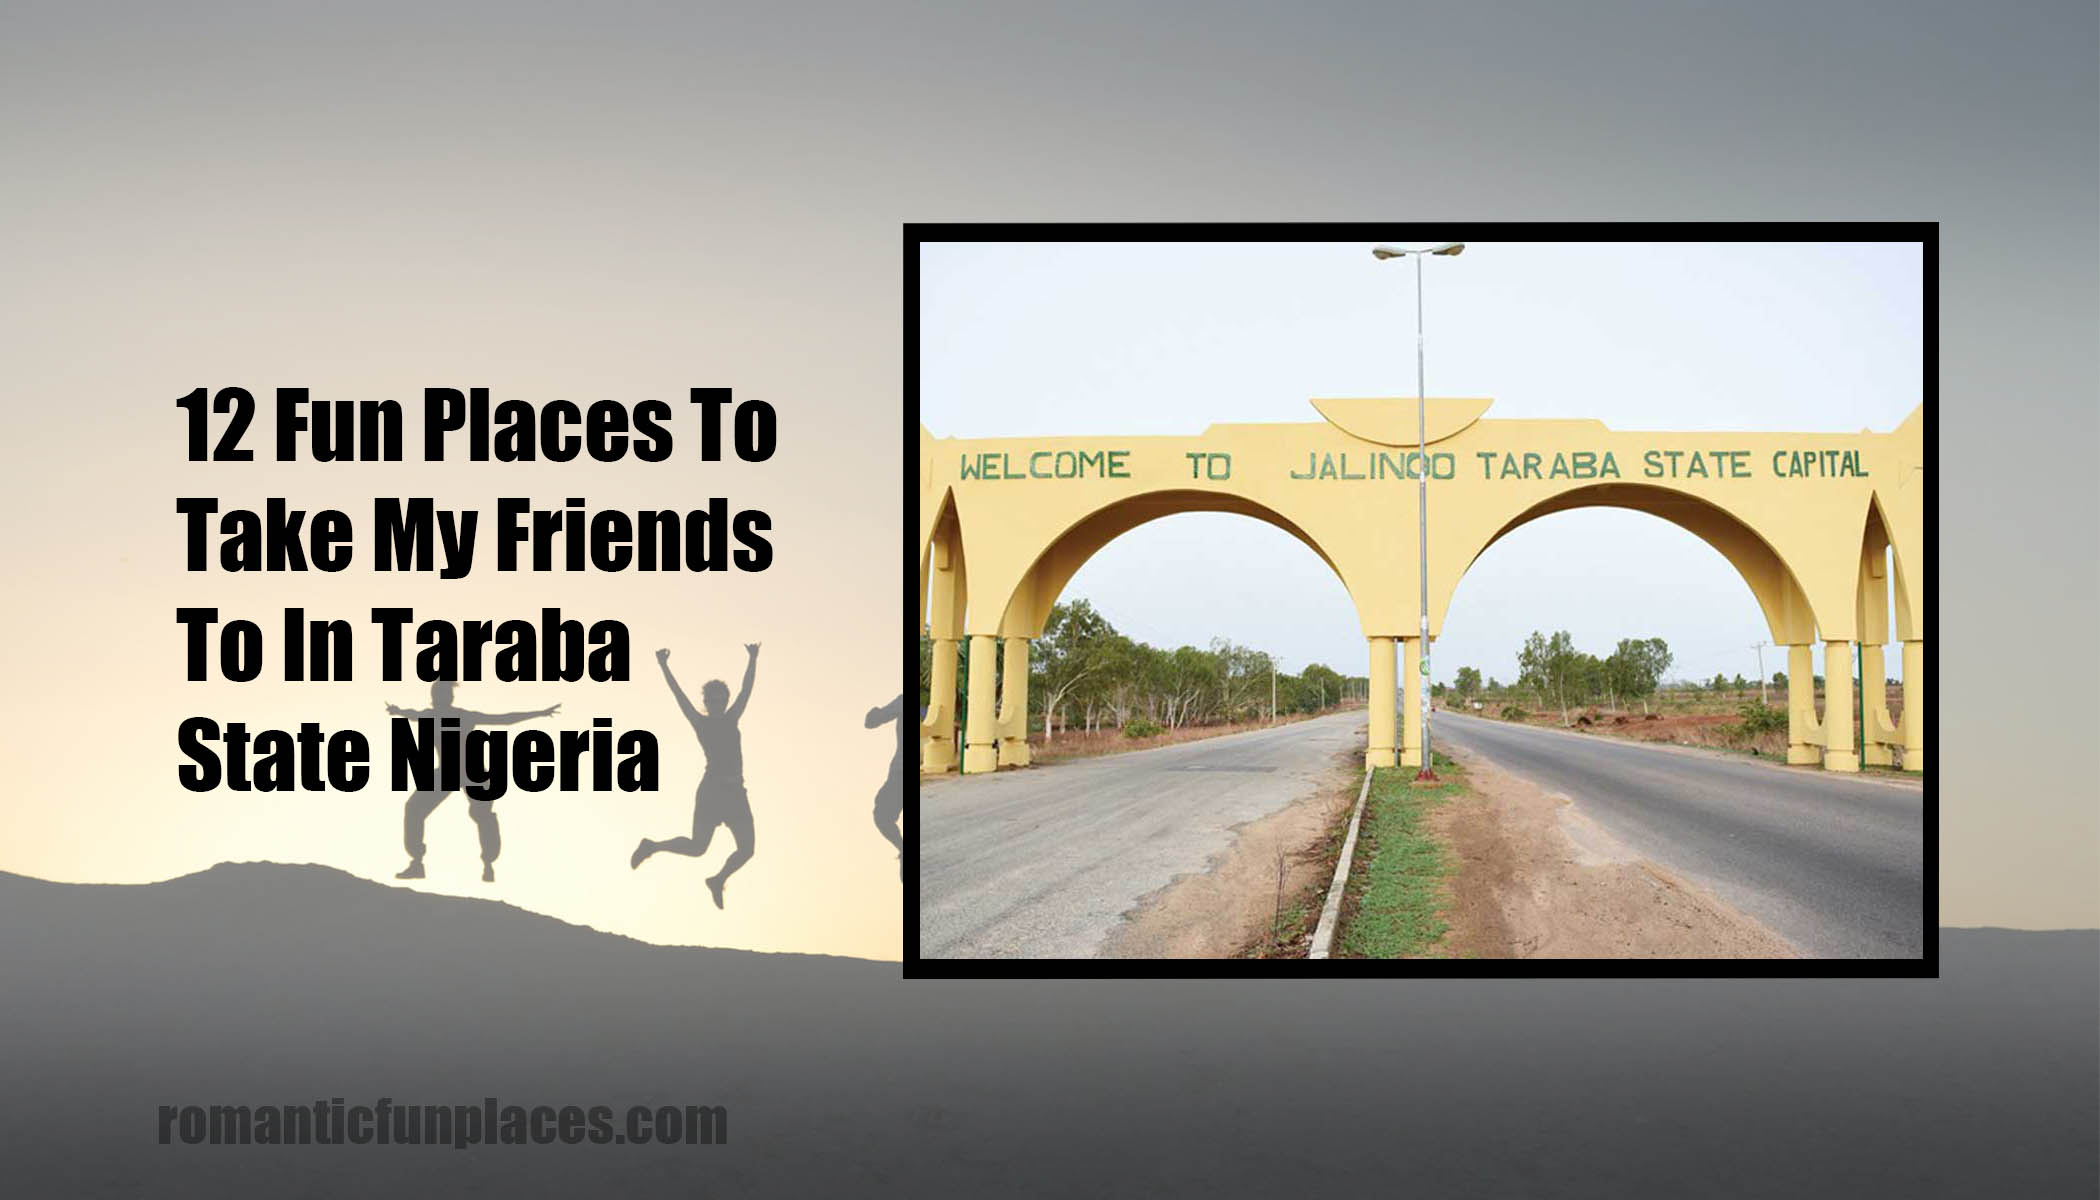 12 Fun Places To Take My Friends To In Taraba State Nigeria